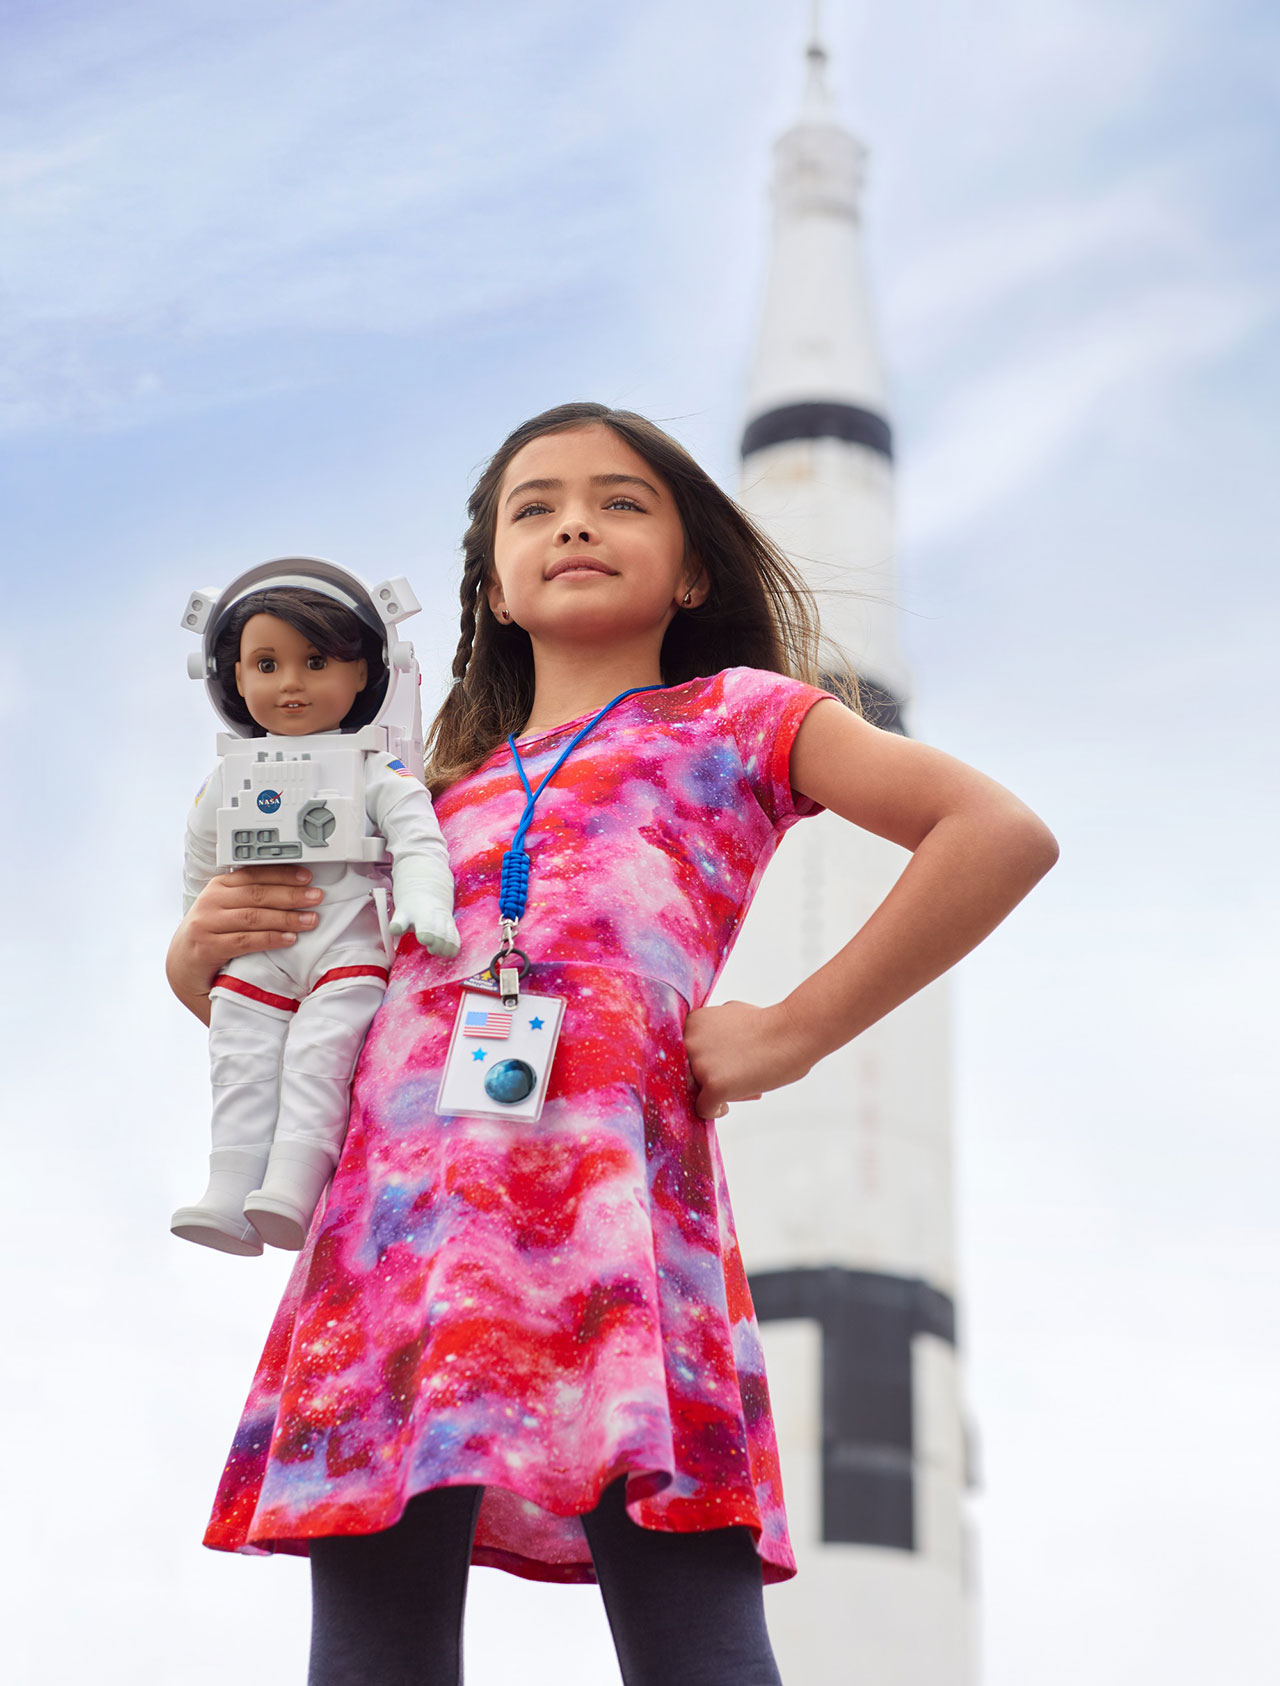 American Girl's new NASA-advised doll is aspiring astronaut ...